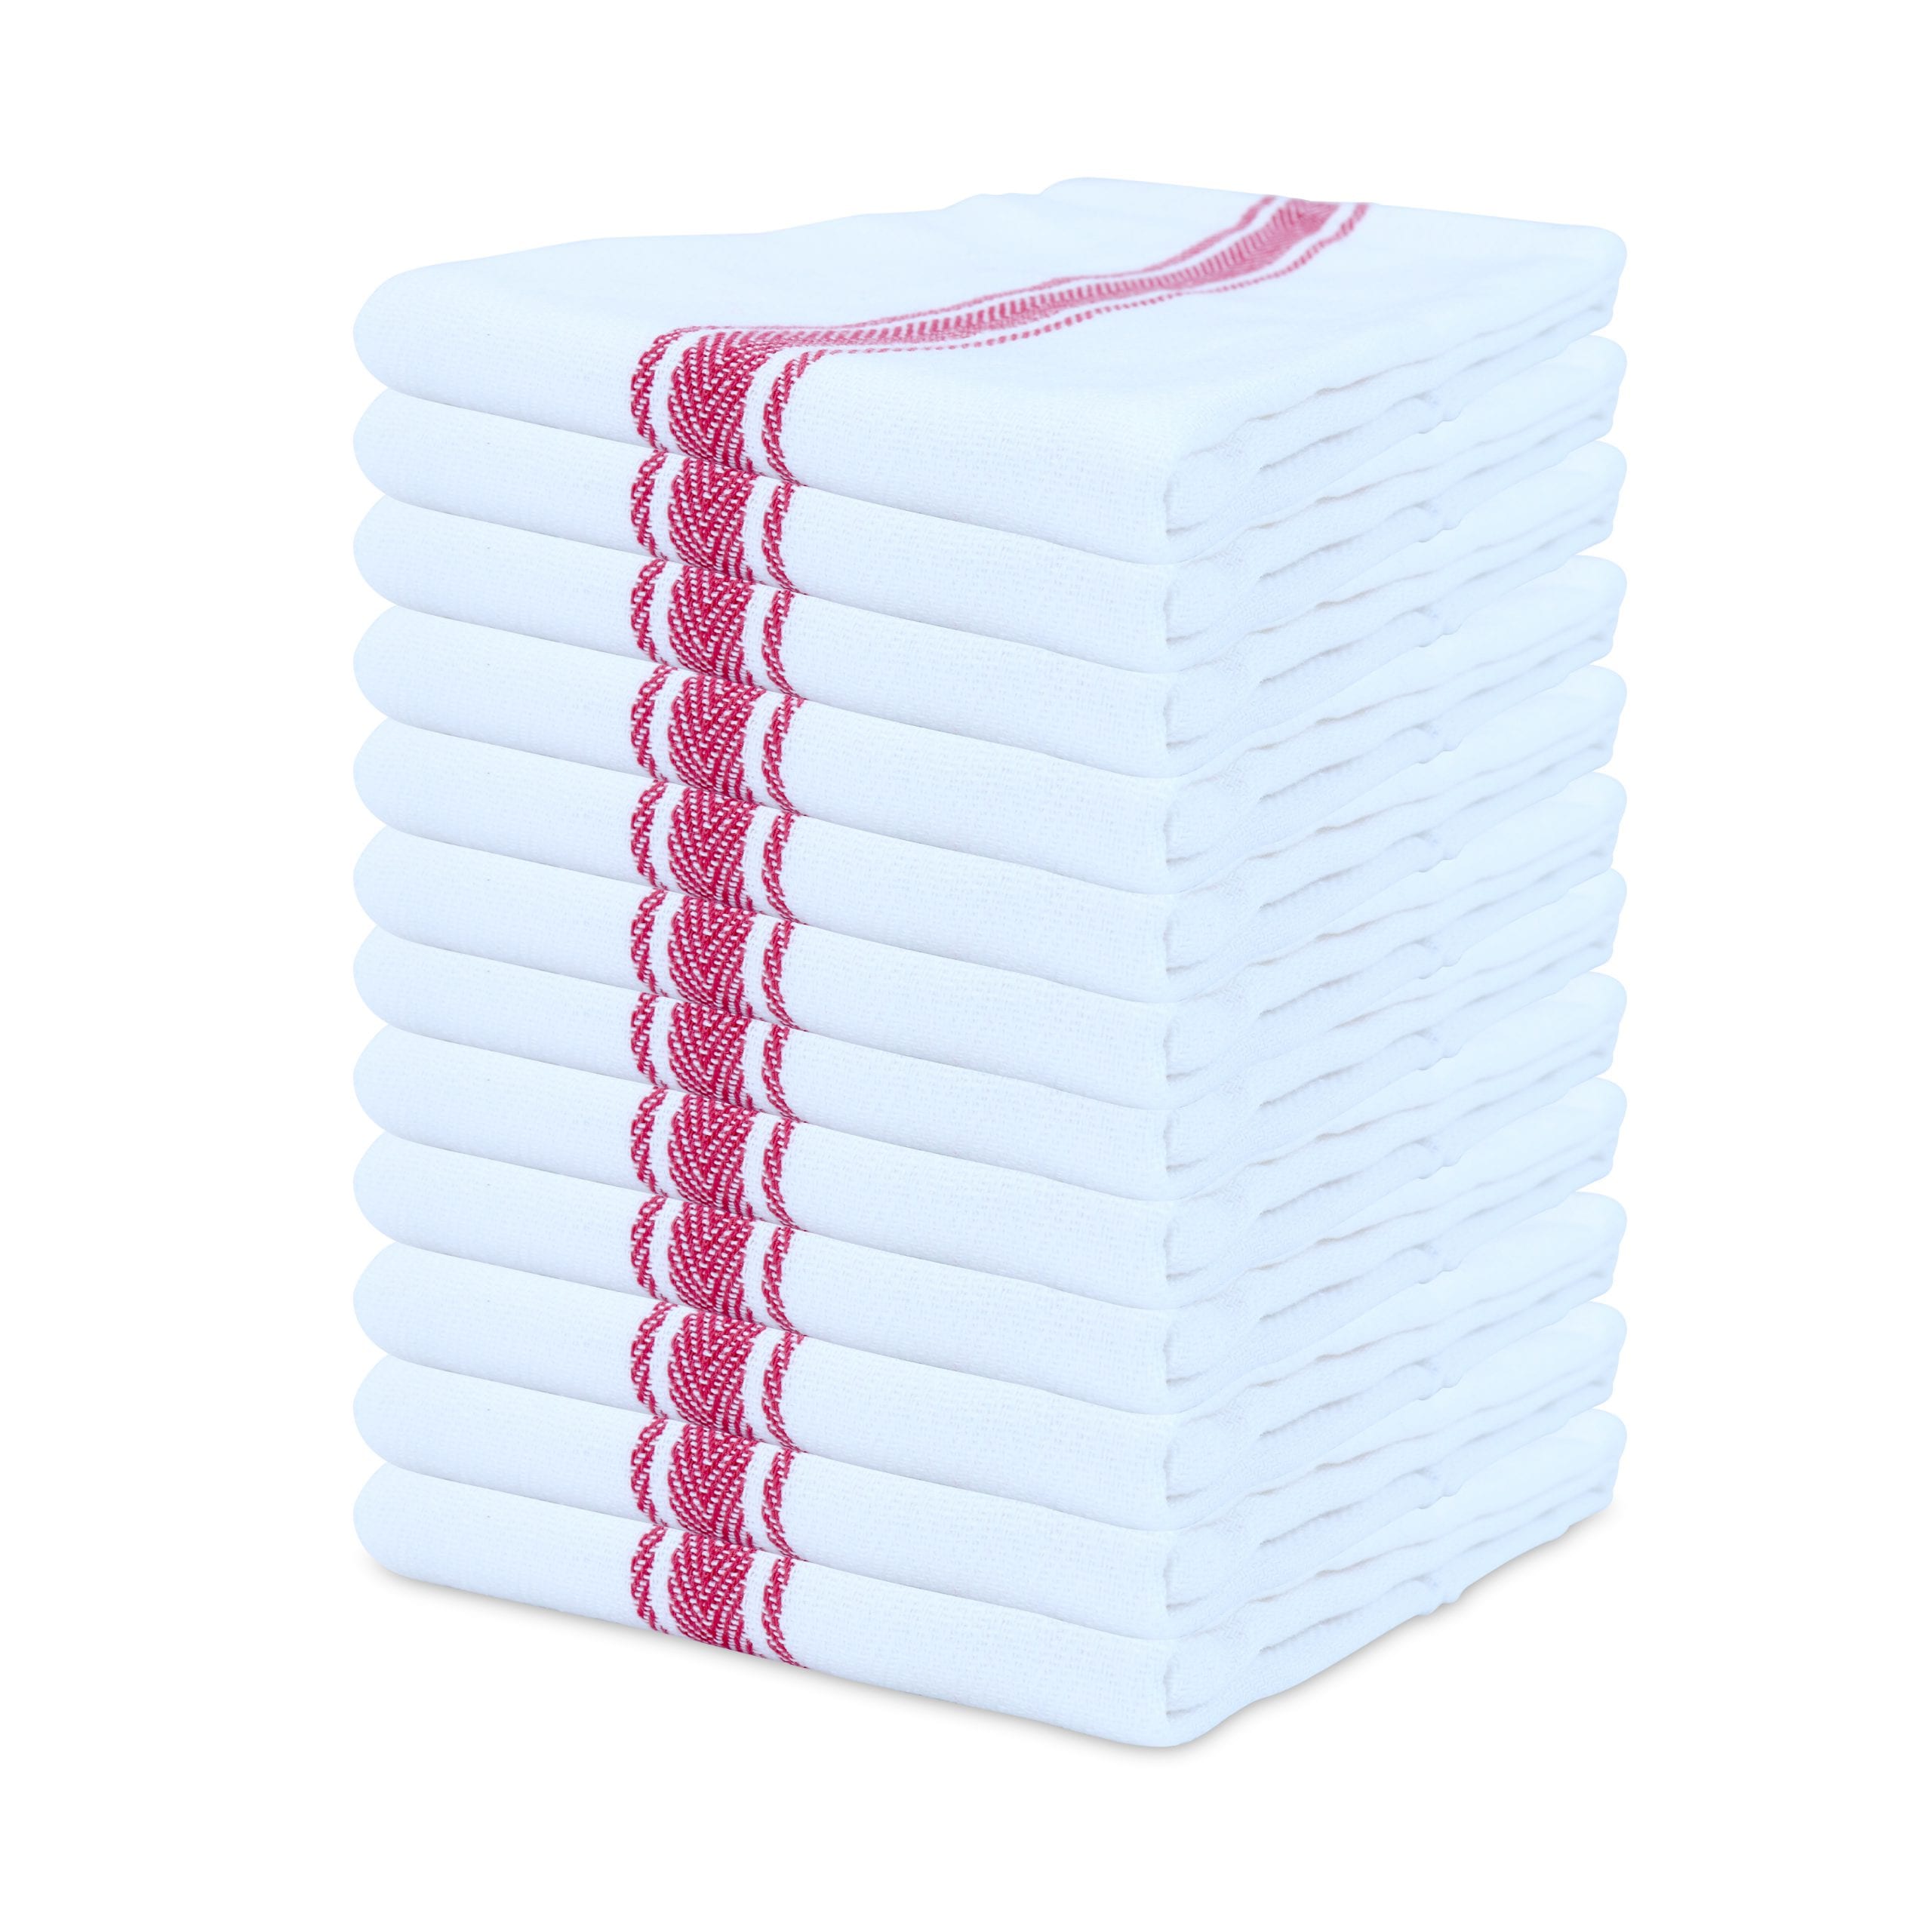 Design Imports Chef Stripe Kitchen Towels 3-pack - 9910908